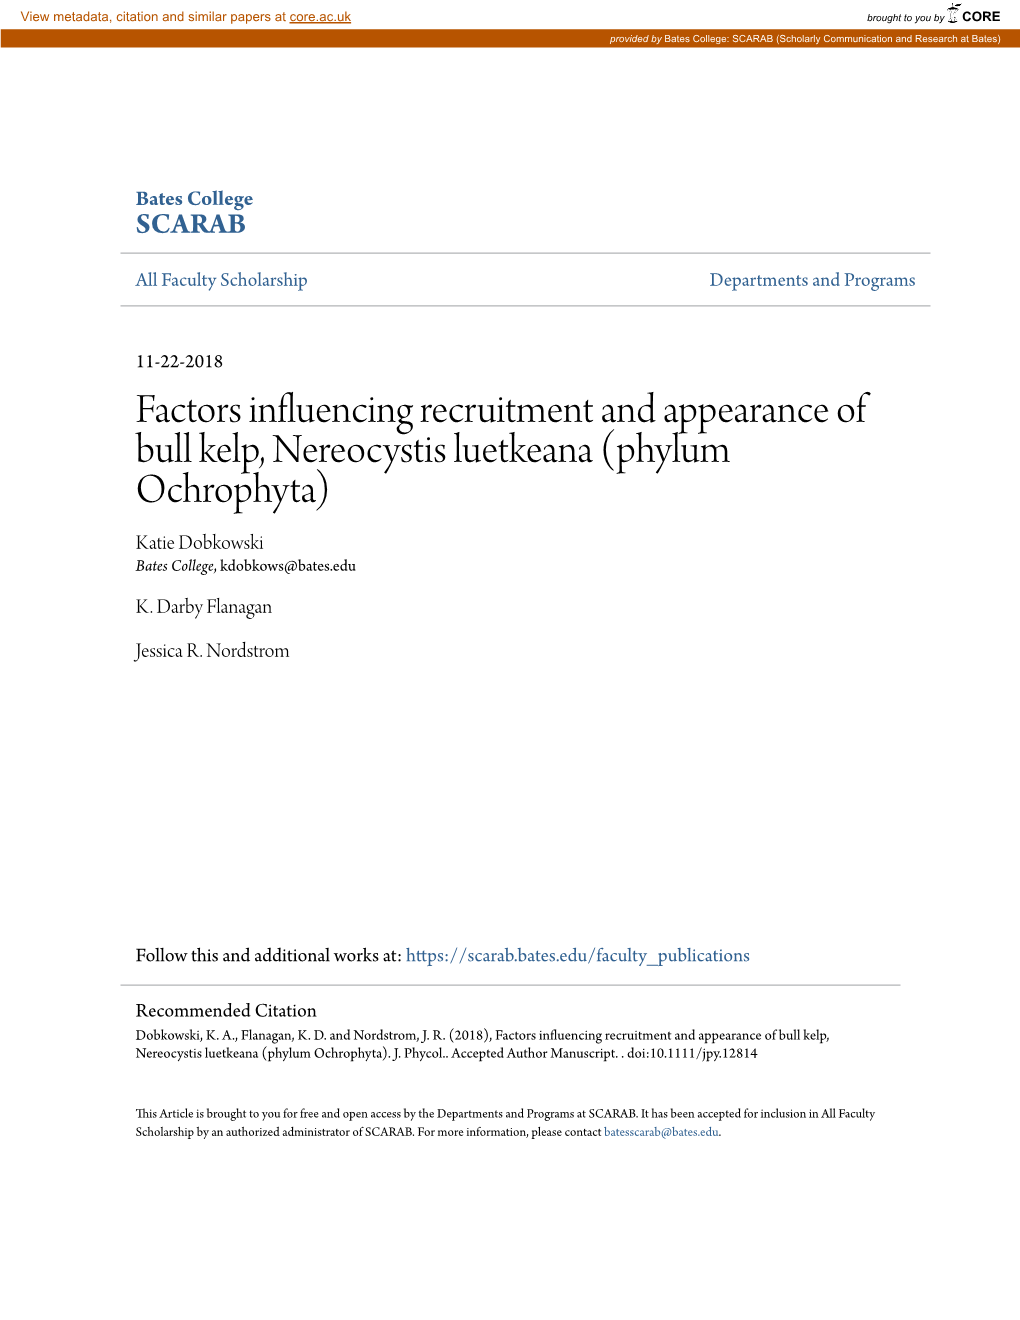 Factors Influencing Recruitment and Appearance of Bull Kelp, Nereocystis Luetkeana (Phylum Ochrophyta) Katie Dobkowski Bates College, Kdobkows@Bates.Edu